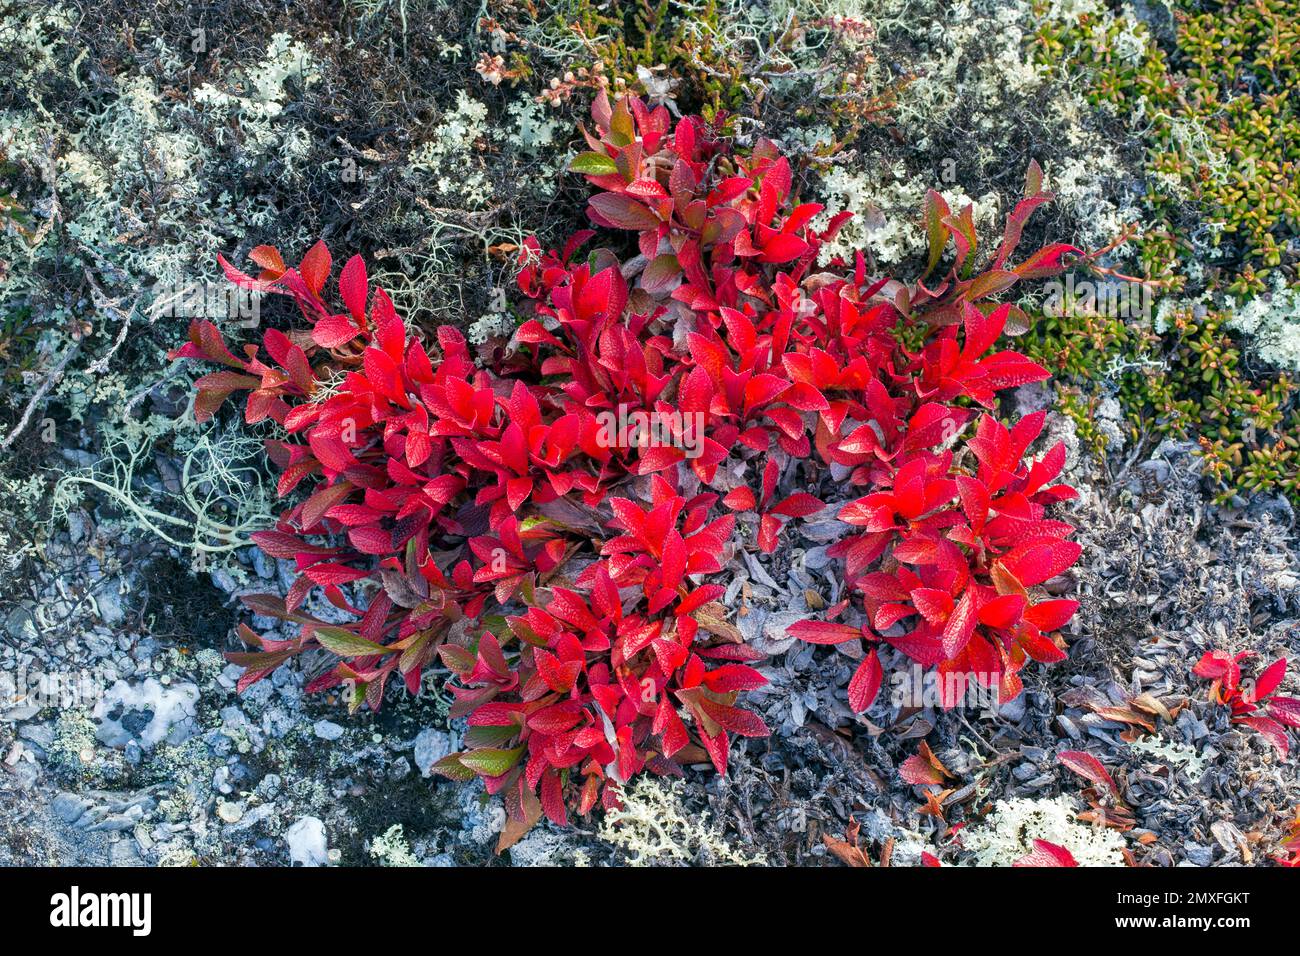 Bearberry alpino / bearberry montano / bearberry nero (Arctous alpina / Arctostaphylos alpina) con colori autunnali rossi sulla tundra, Lapponia, Svezia Foto Stock